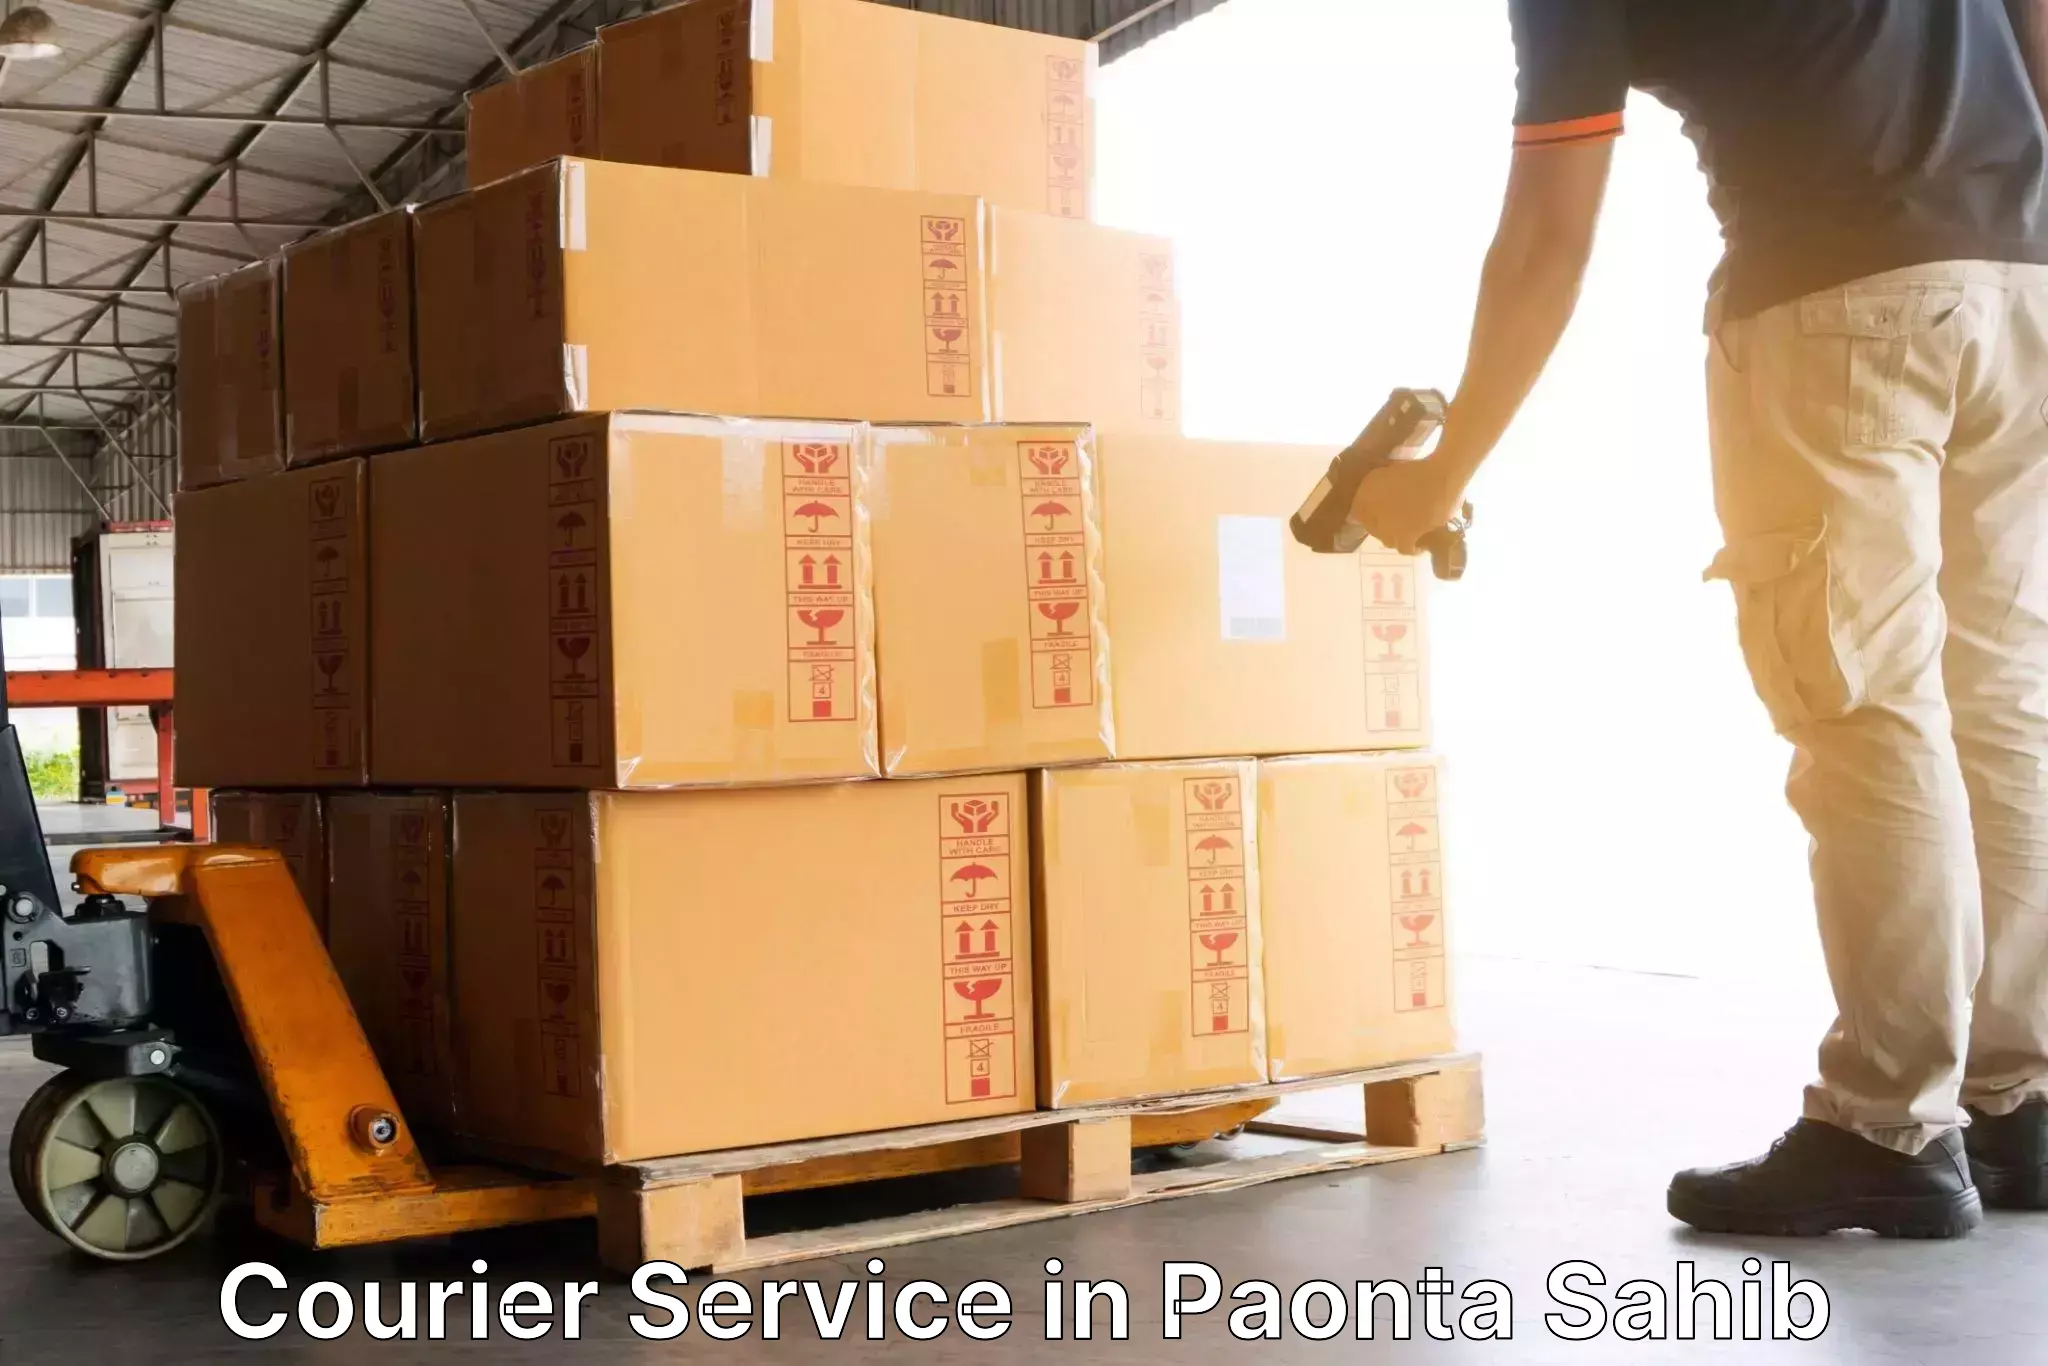 Specialized shipment handling in Paonta Sahib